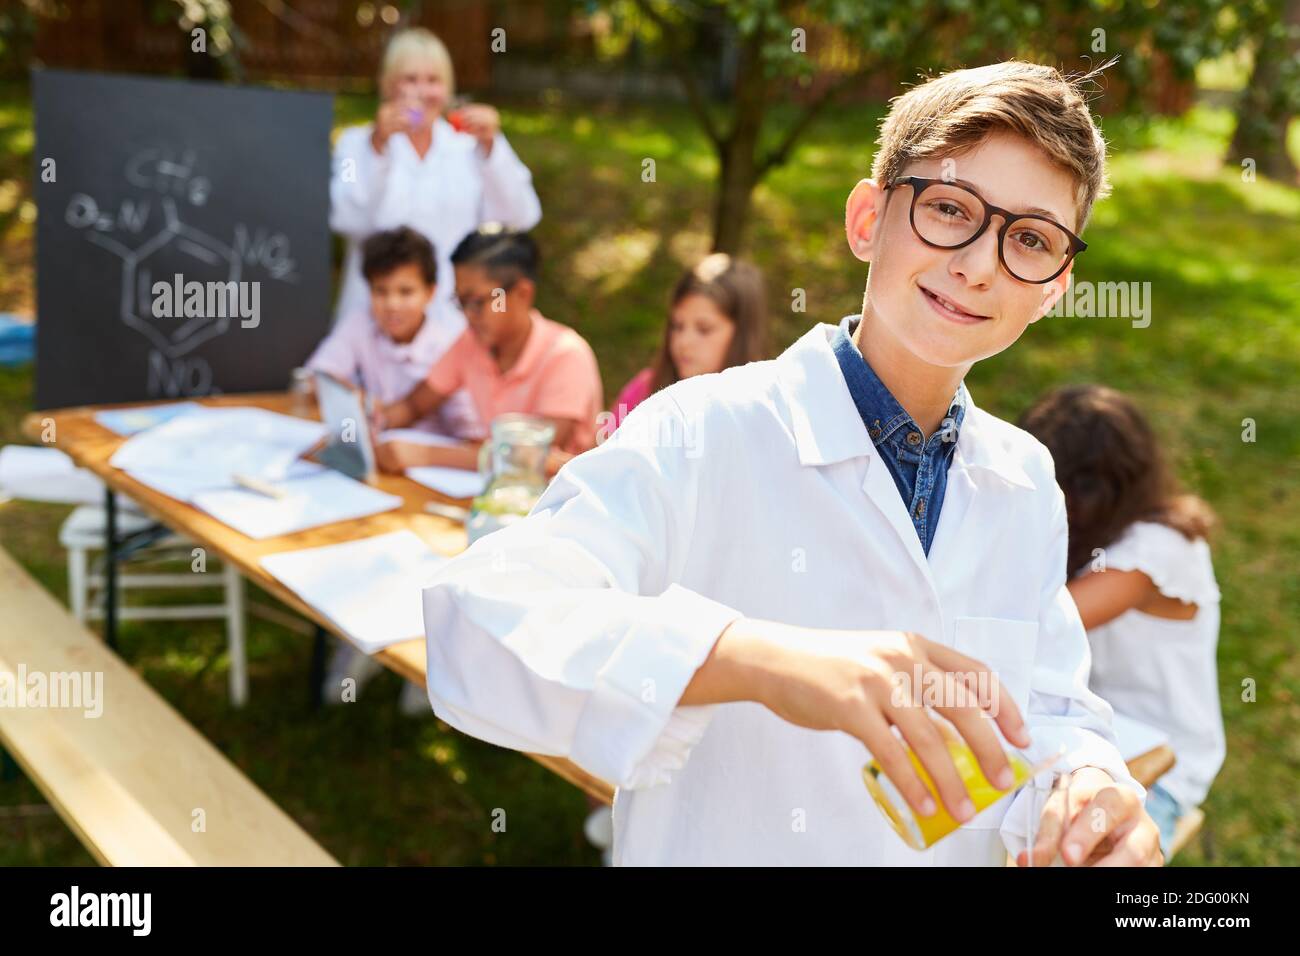 Happy boy in summer school chemistry tutoring course Stock Photo